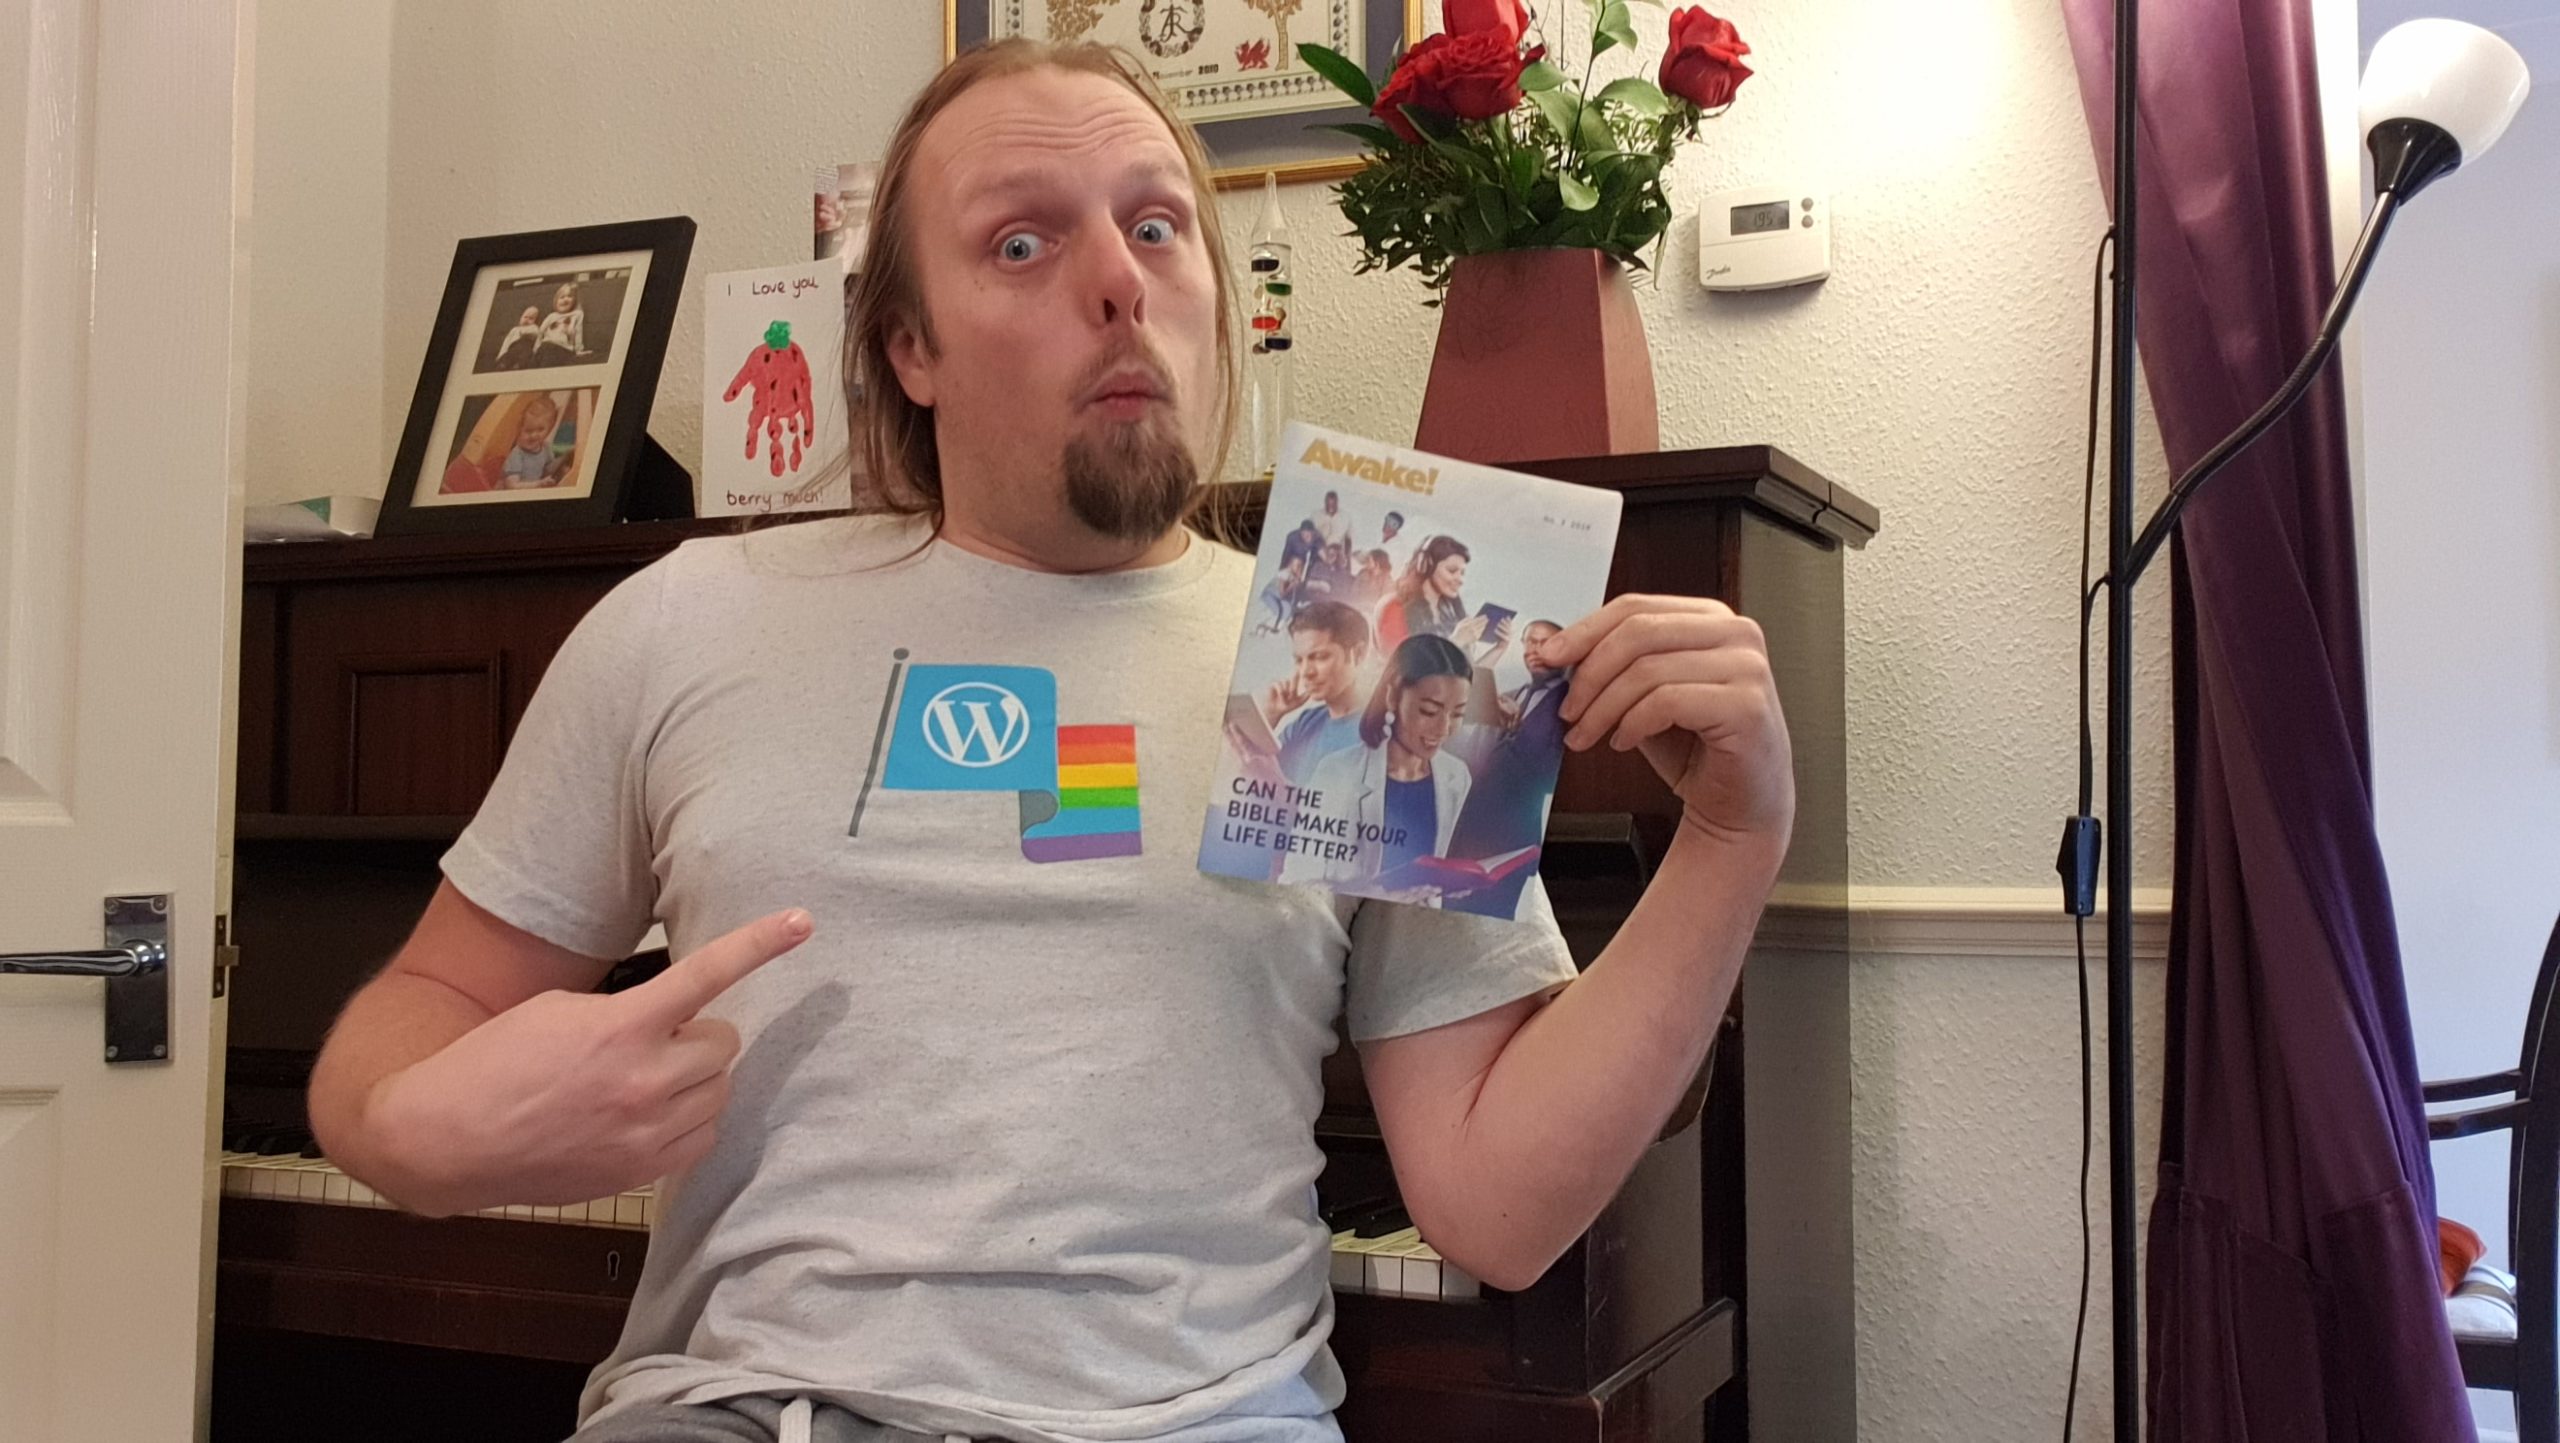 Dan with a copy of Awake!, wearing his WordPress Diversity t-shirt.